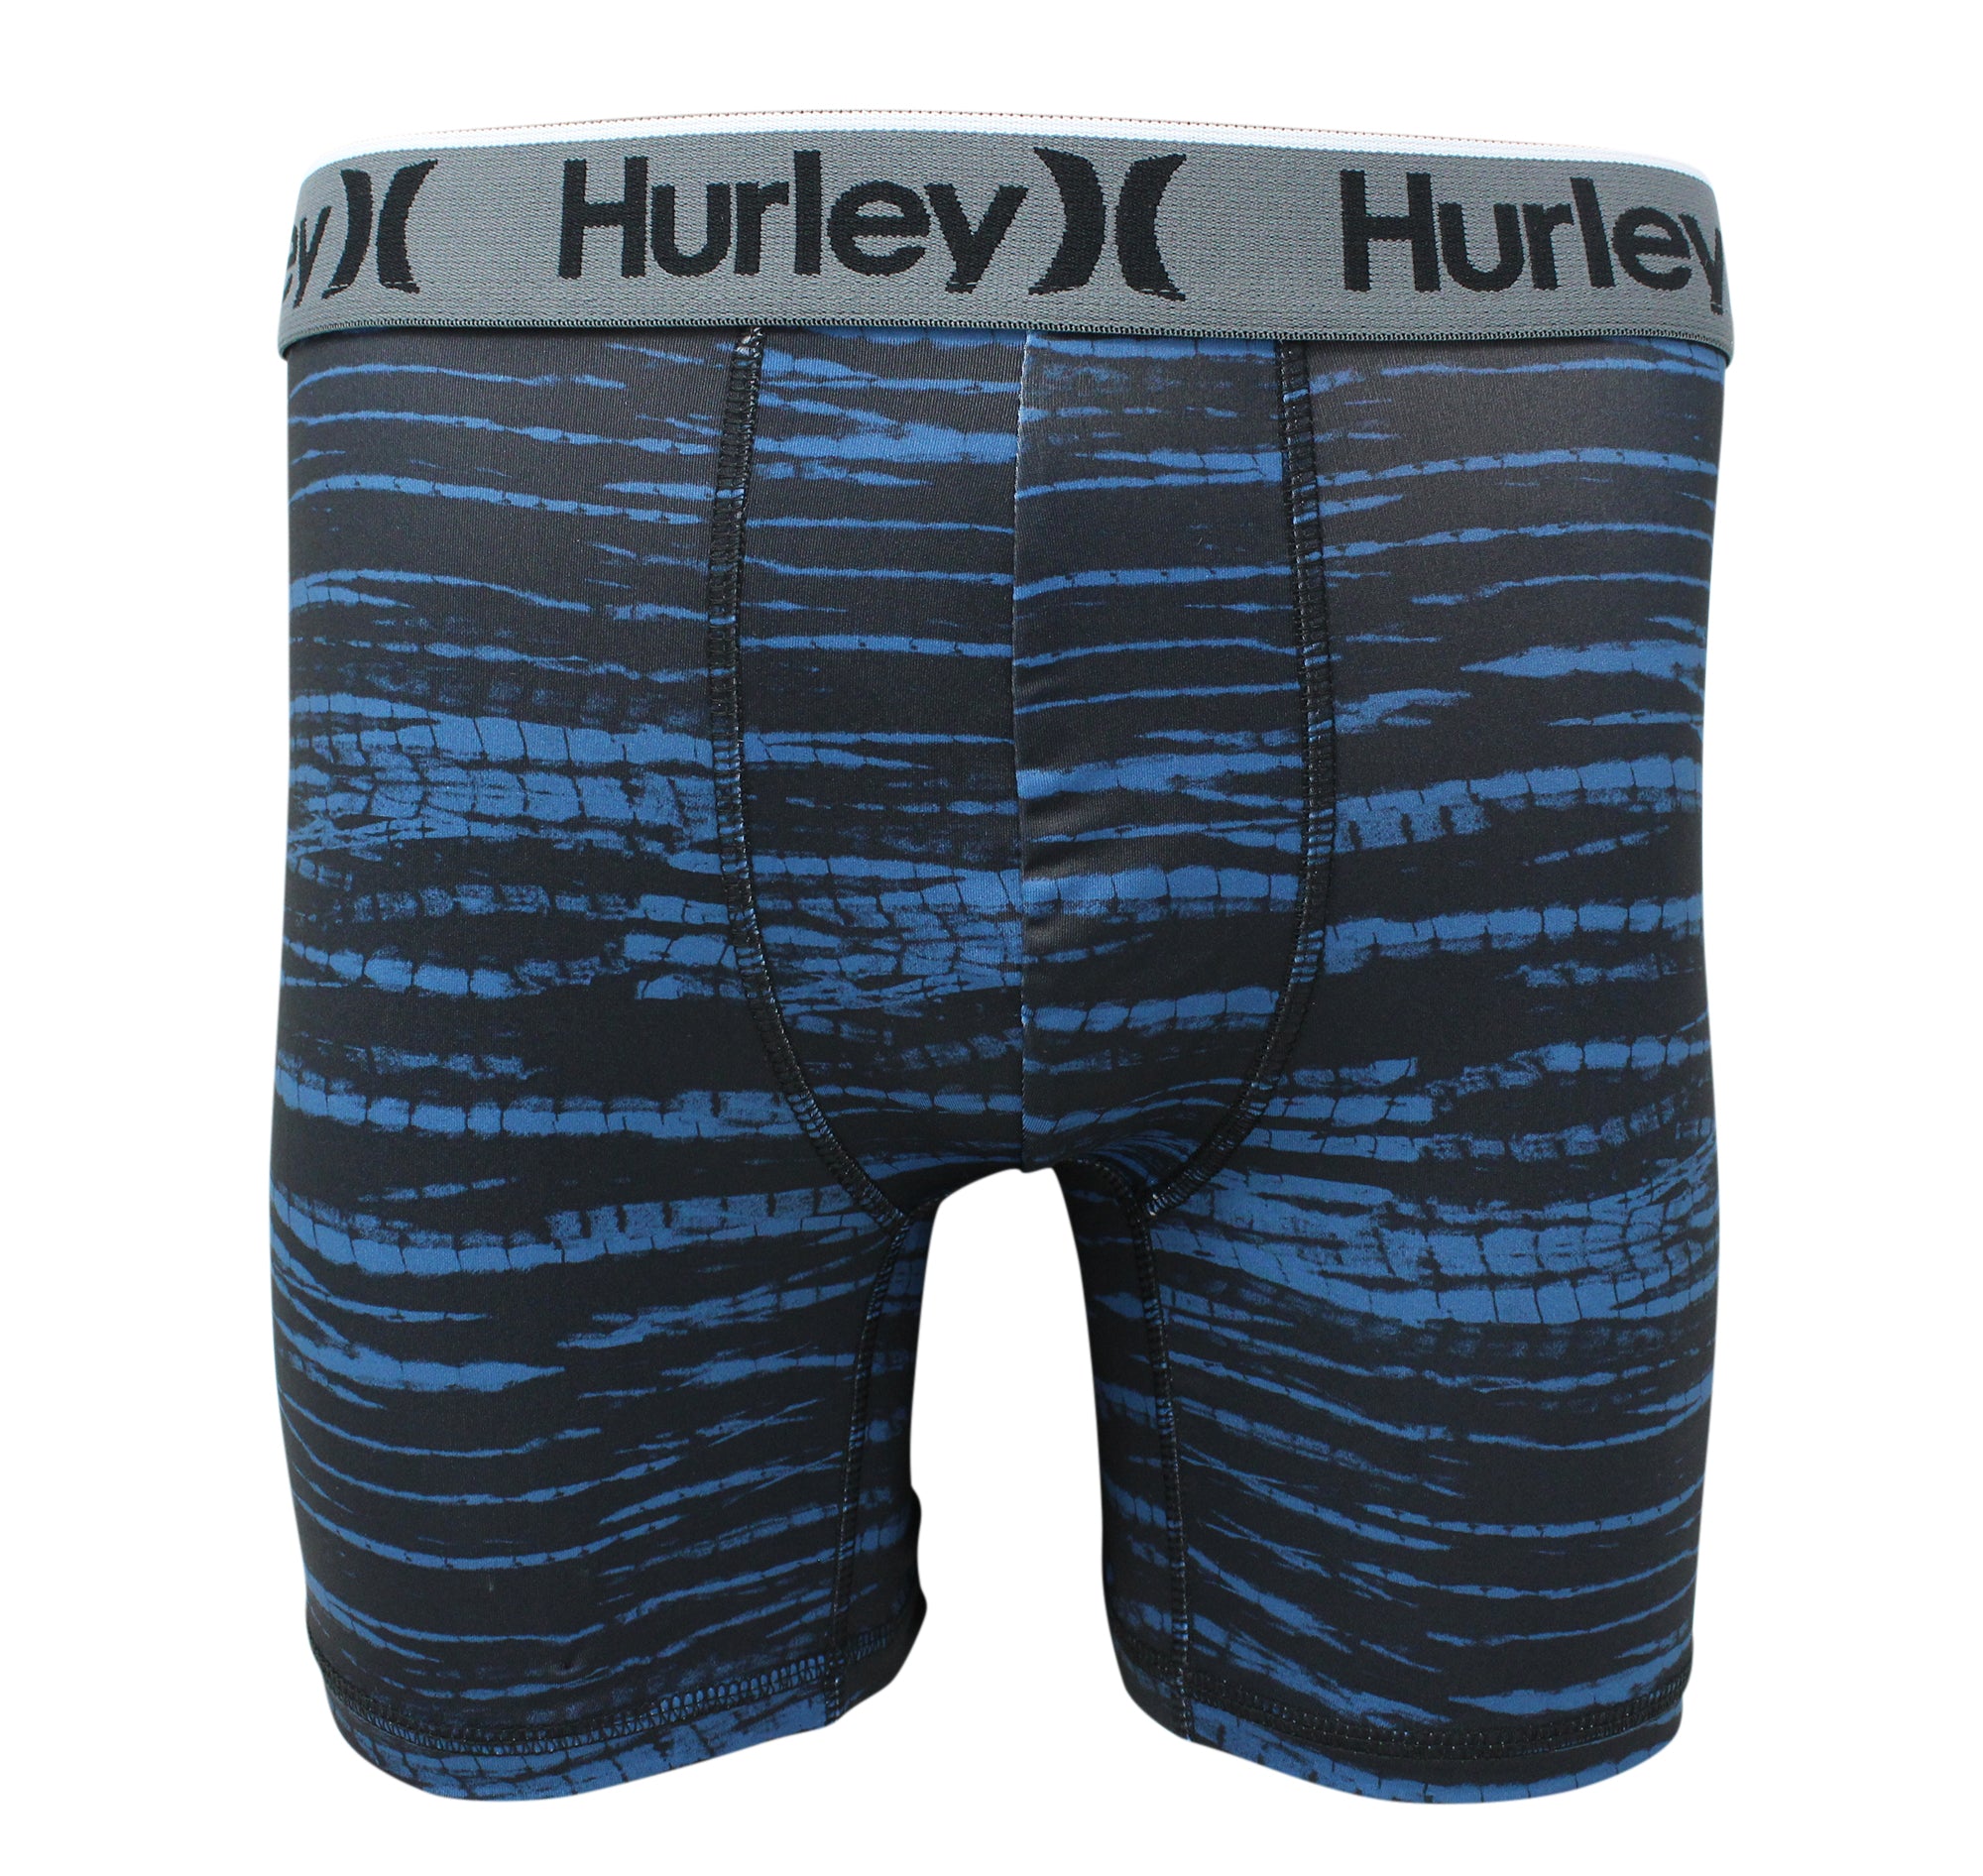 Hurley Men's Large Boxer Briefs Performance Athletic, Blue